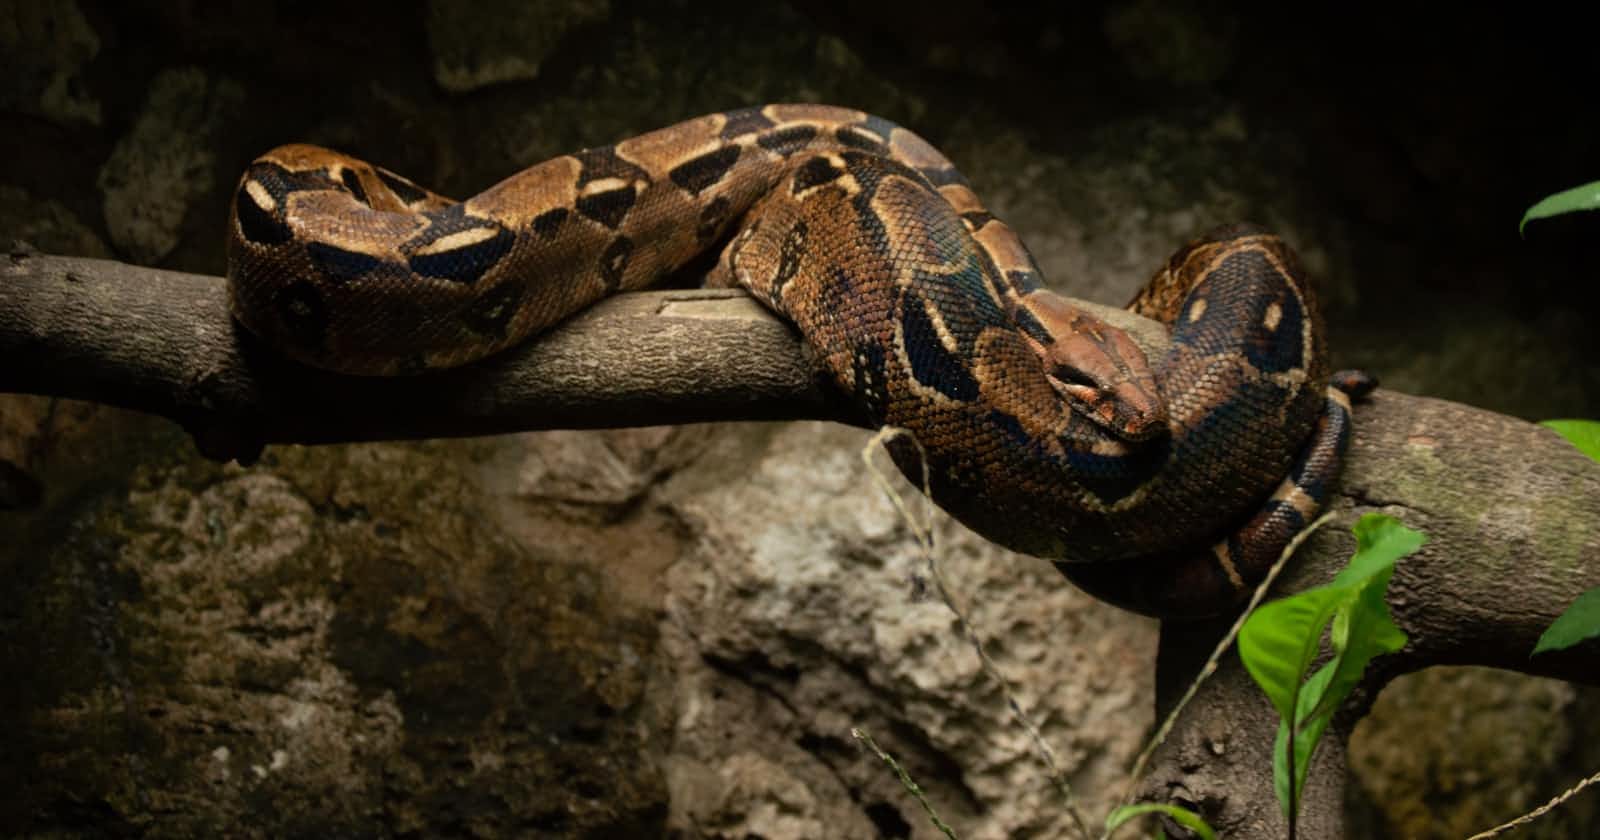 Episode 7: Python: The Slow, Bulky But Formidable Predator